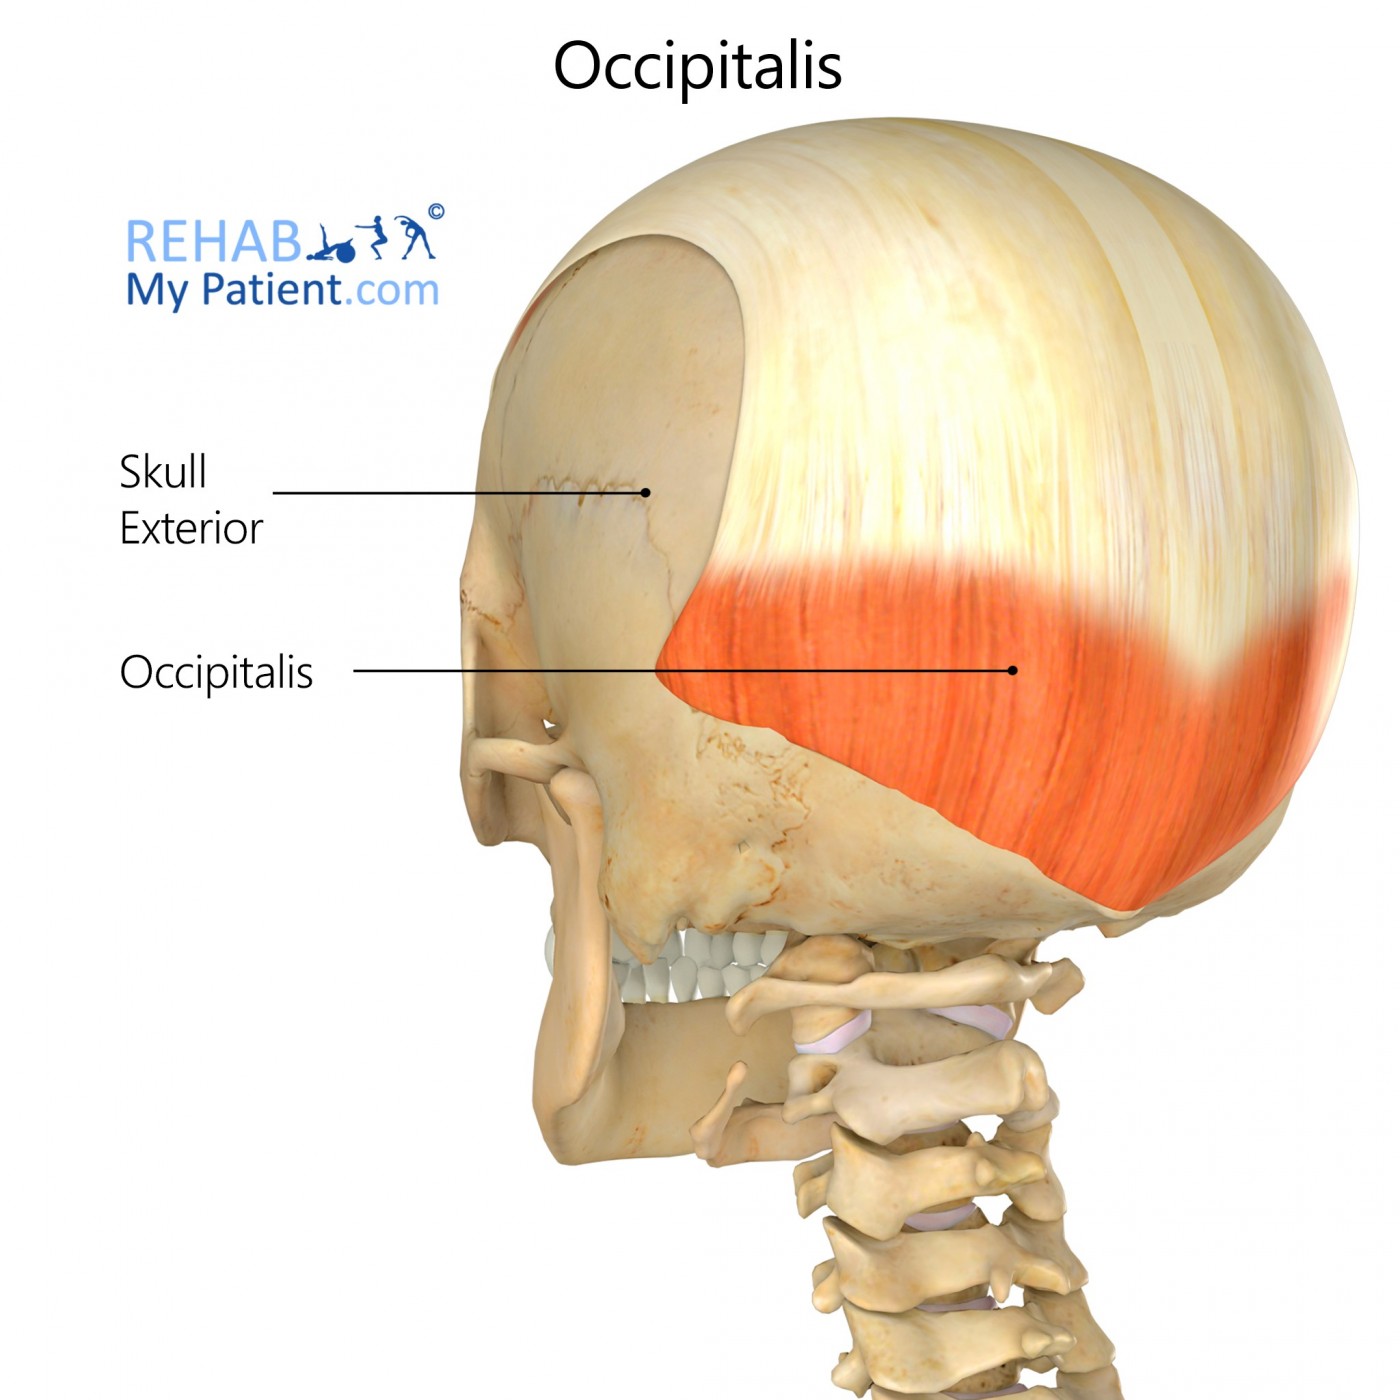 Occipitalis (head)